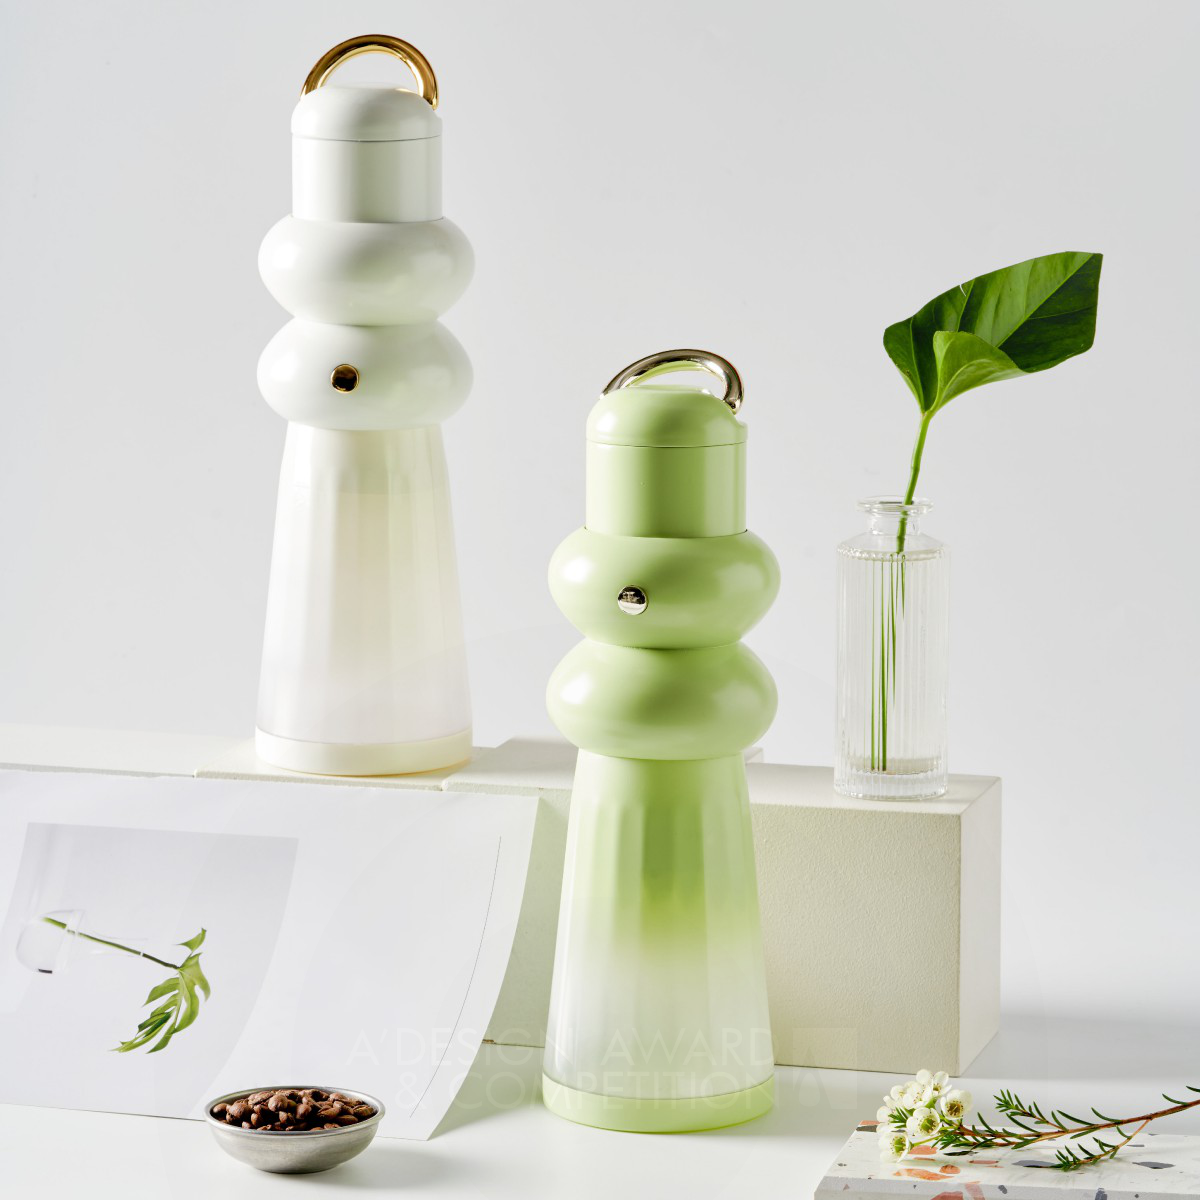 Shuyun Li wins Bronze at the prestigious A' Home Appliances Design Award with Vase Multifunctional Juicer.